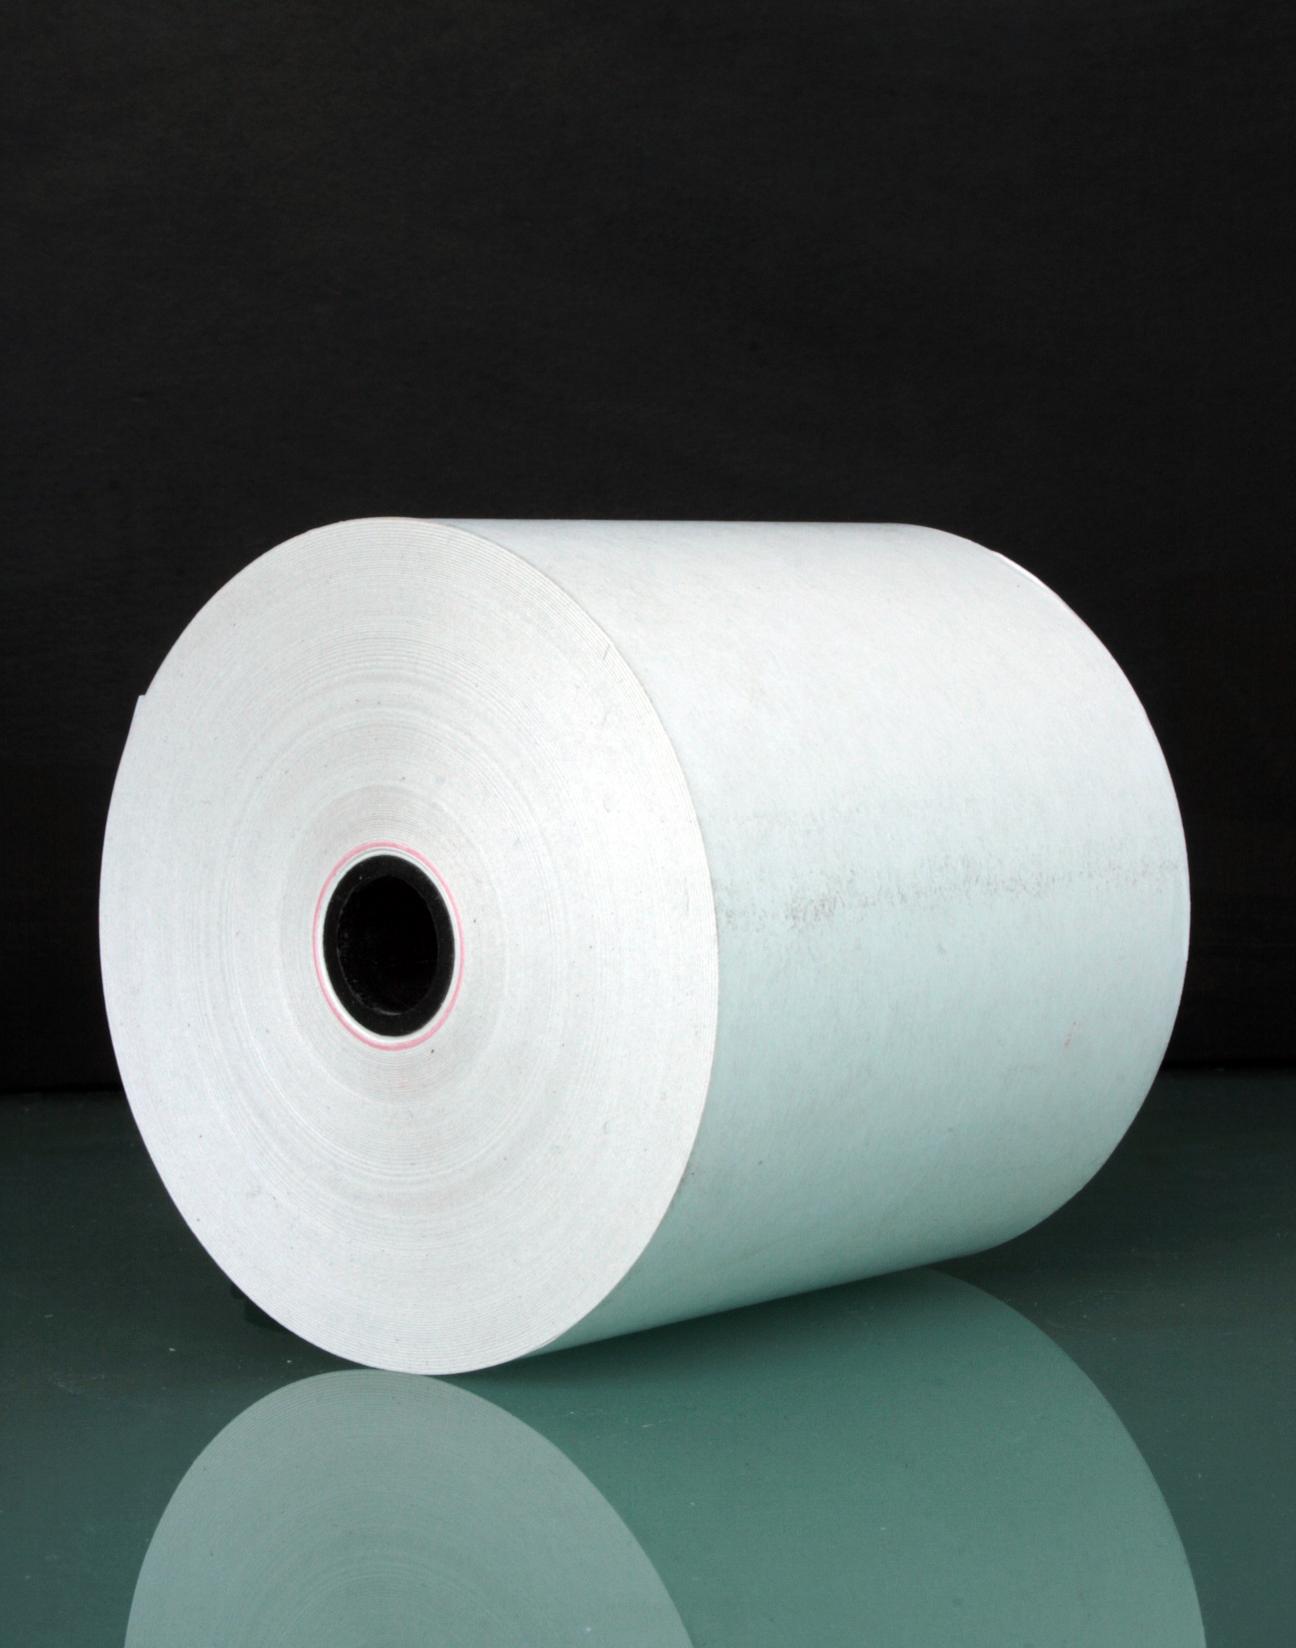 2.25 thermal paper roll - مؤسسة بردي لتجارة و تصنيع الورق الحراري و بكر الكاشير